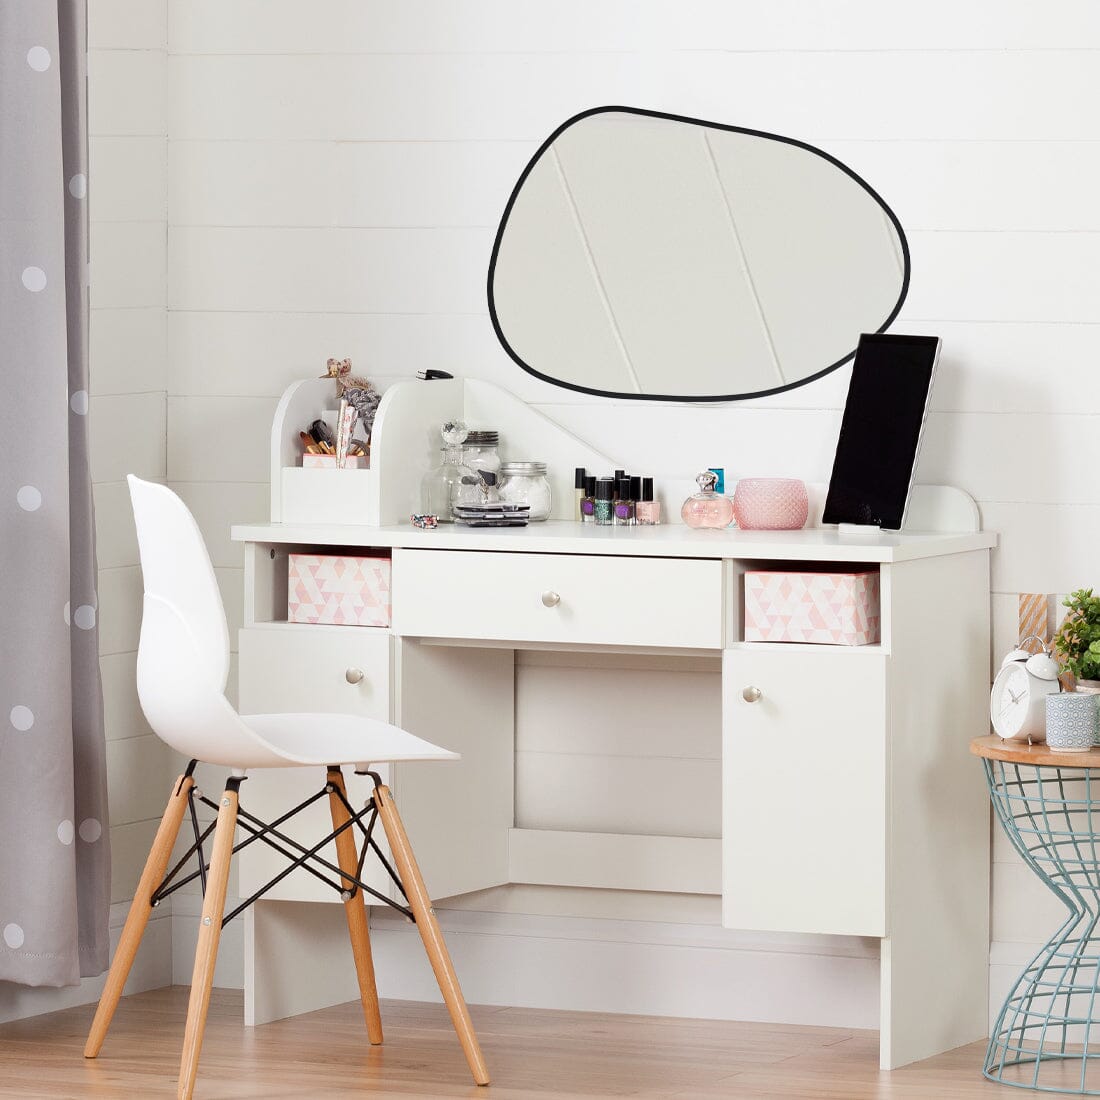 Dressing mirror with wall shelf... - Justjenn Designs | Facebook